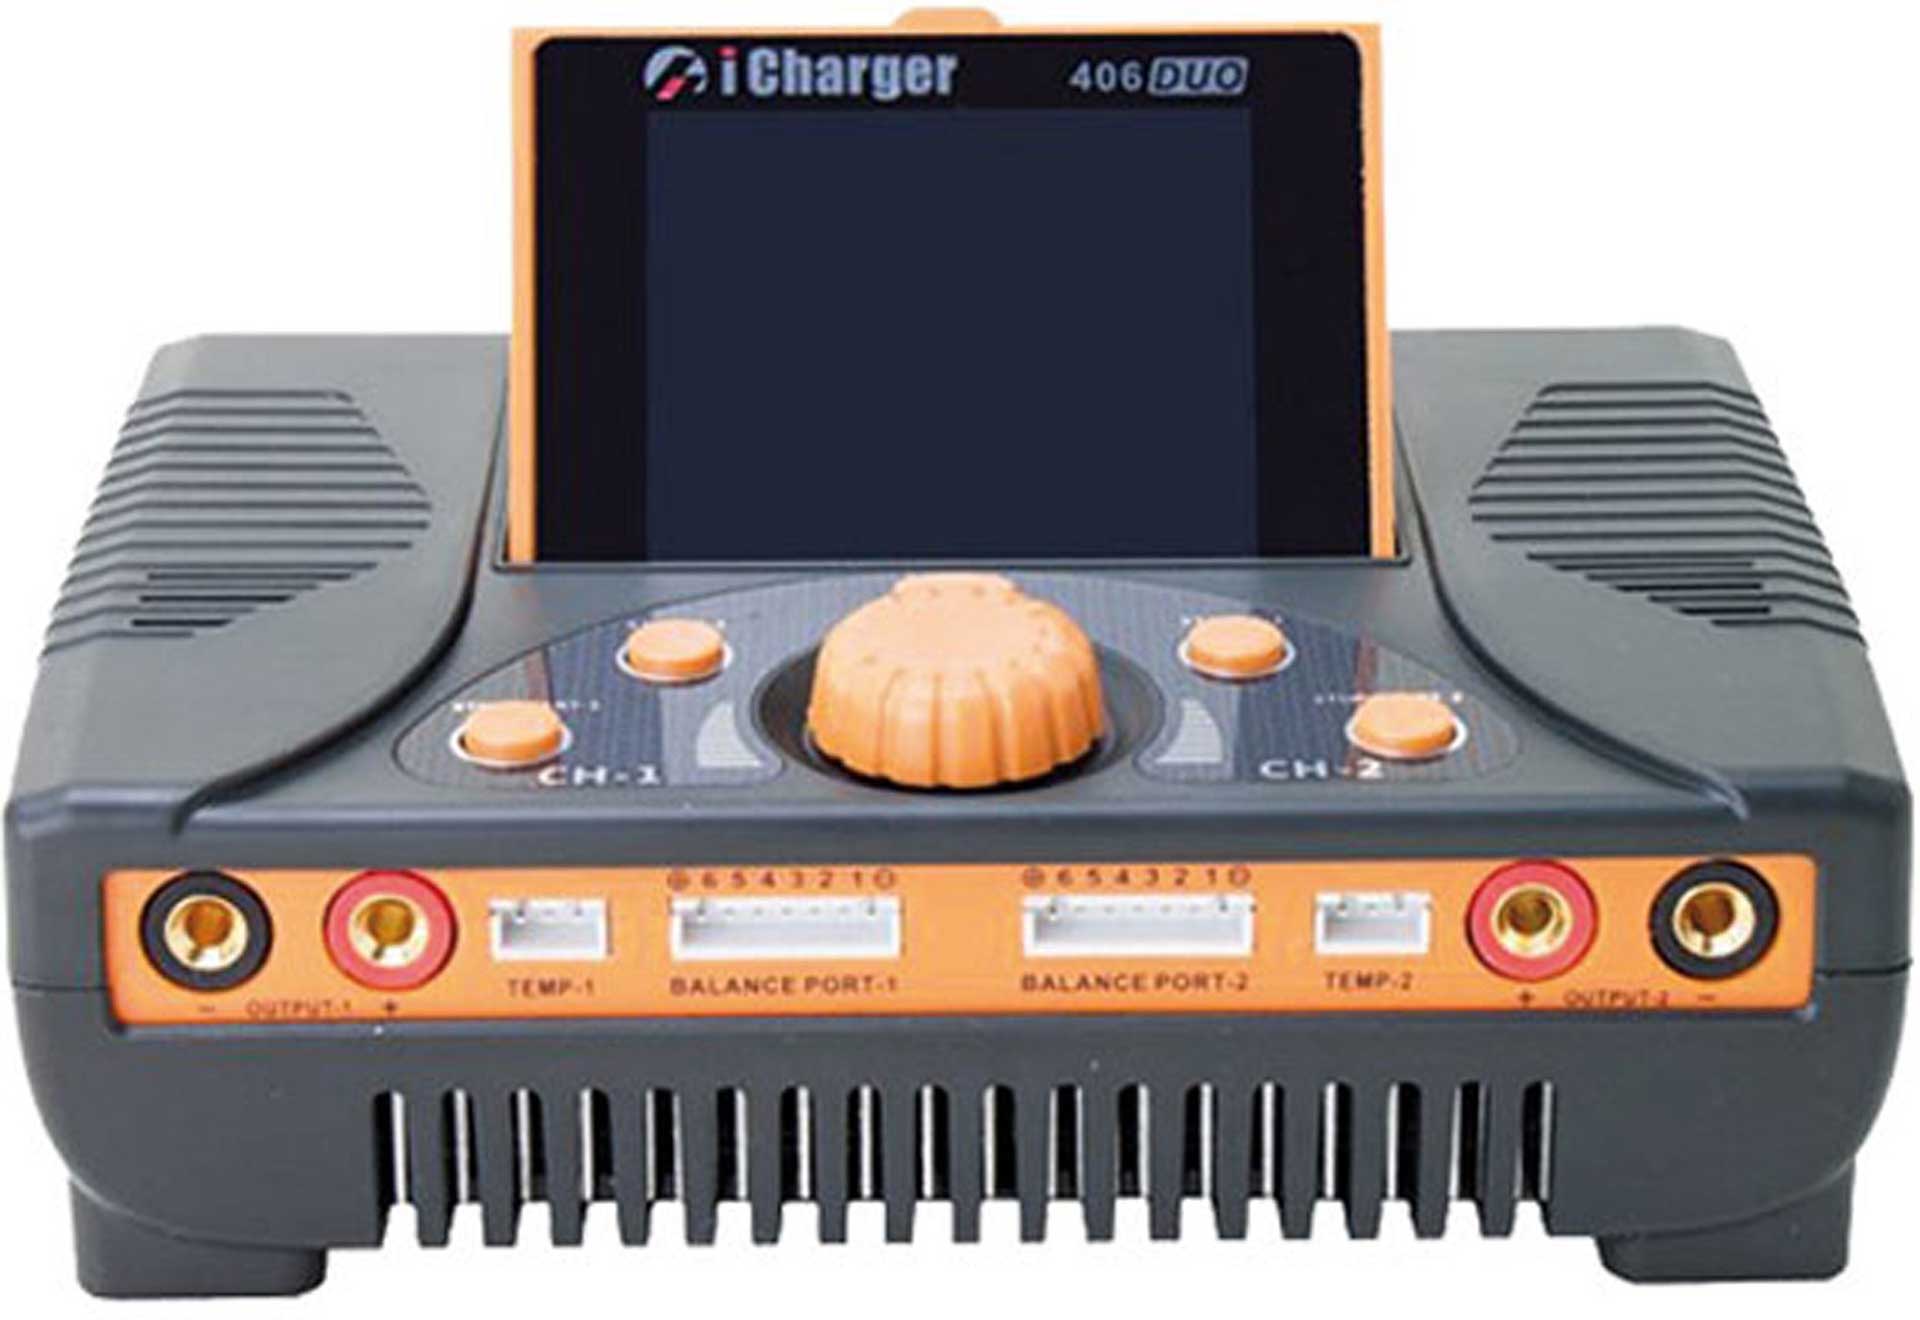 JUN-SI ICHARGER 406 DUO 1400W/60A (2X800W/40A) USB-POWER, M-SD CARD PORT,...